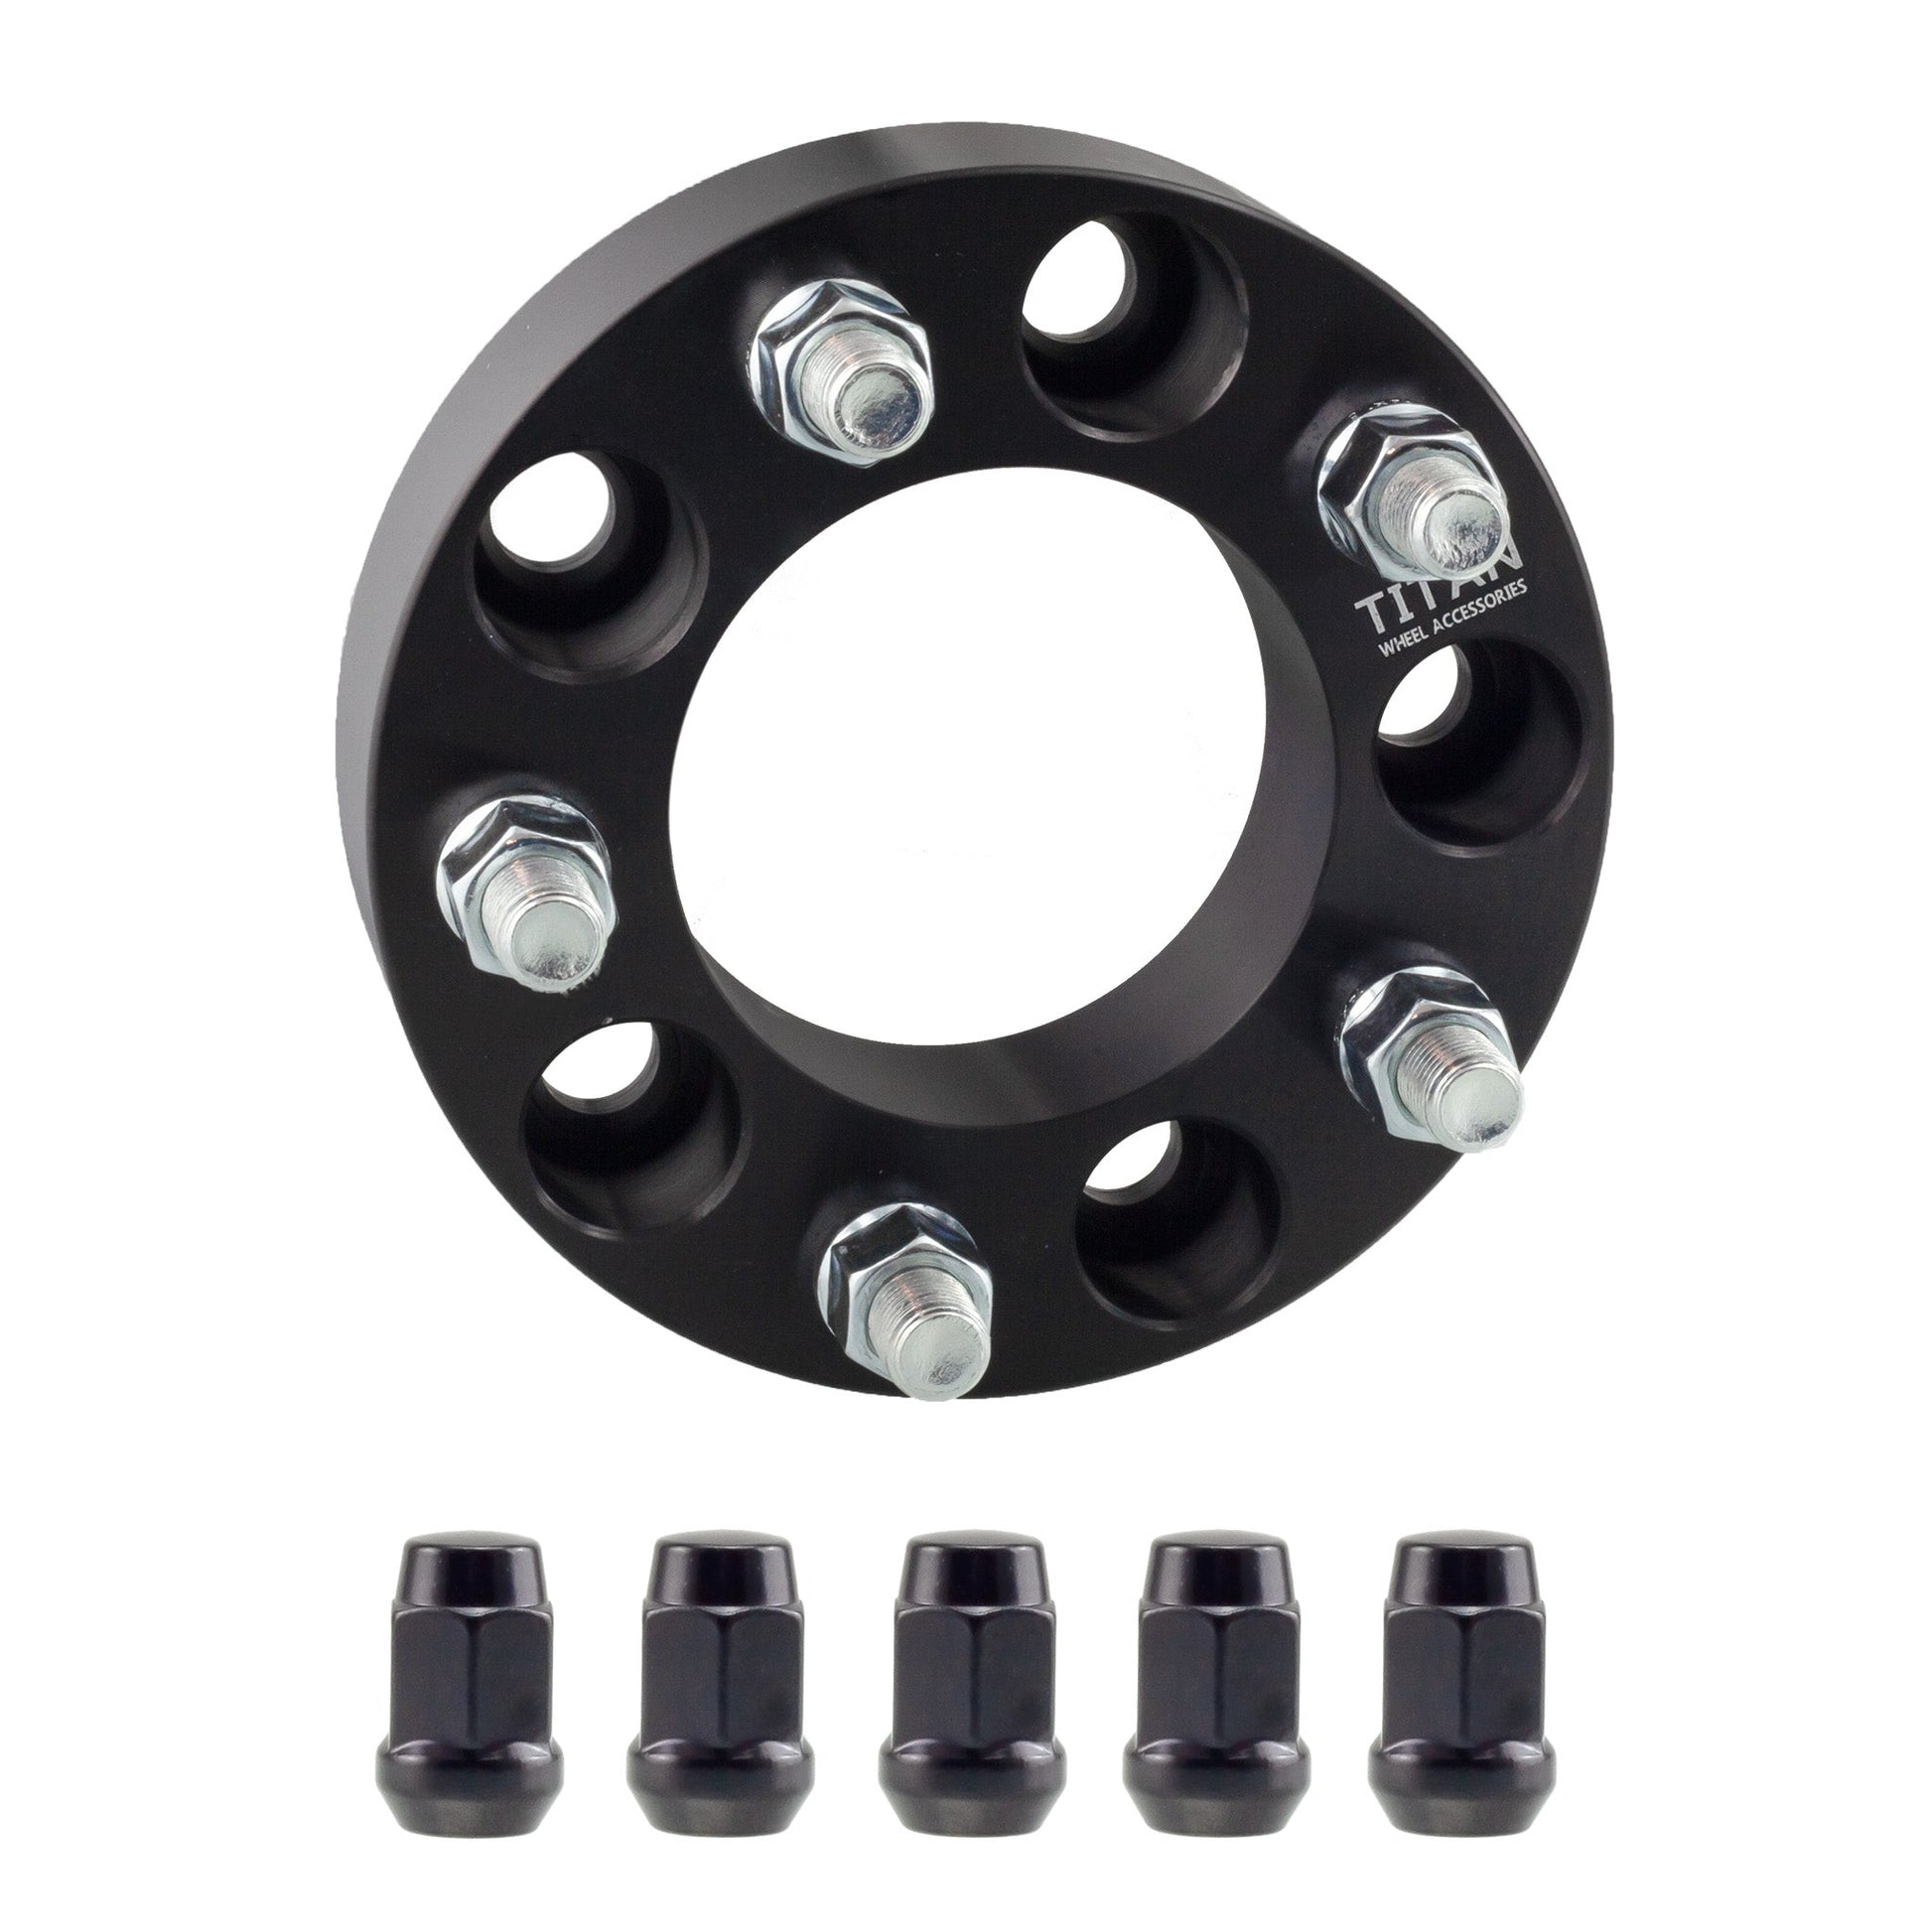 25mm (1") Titan Wheel Spacers for Nissan Altima 350Z 370Z Infiniti Q50 G35 G37 | 5x114.3 | 12x1.25 Studs | Titan Wheel Accessories